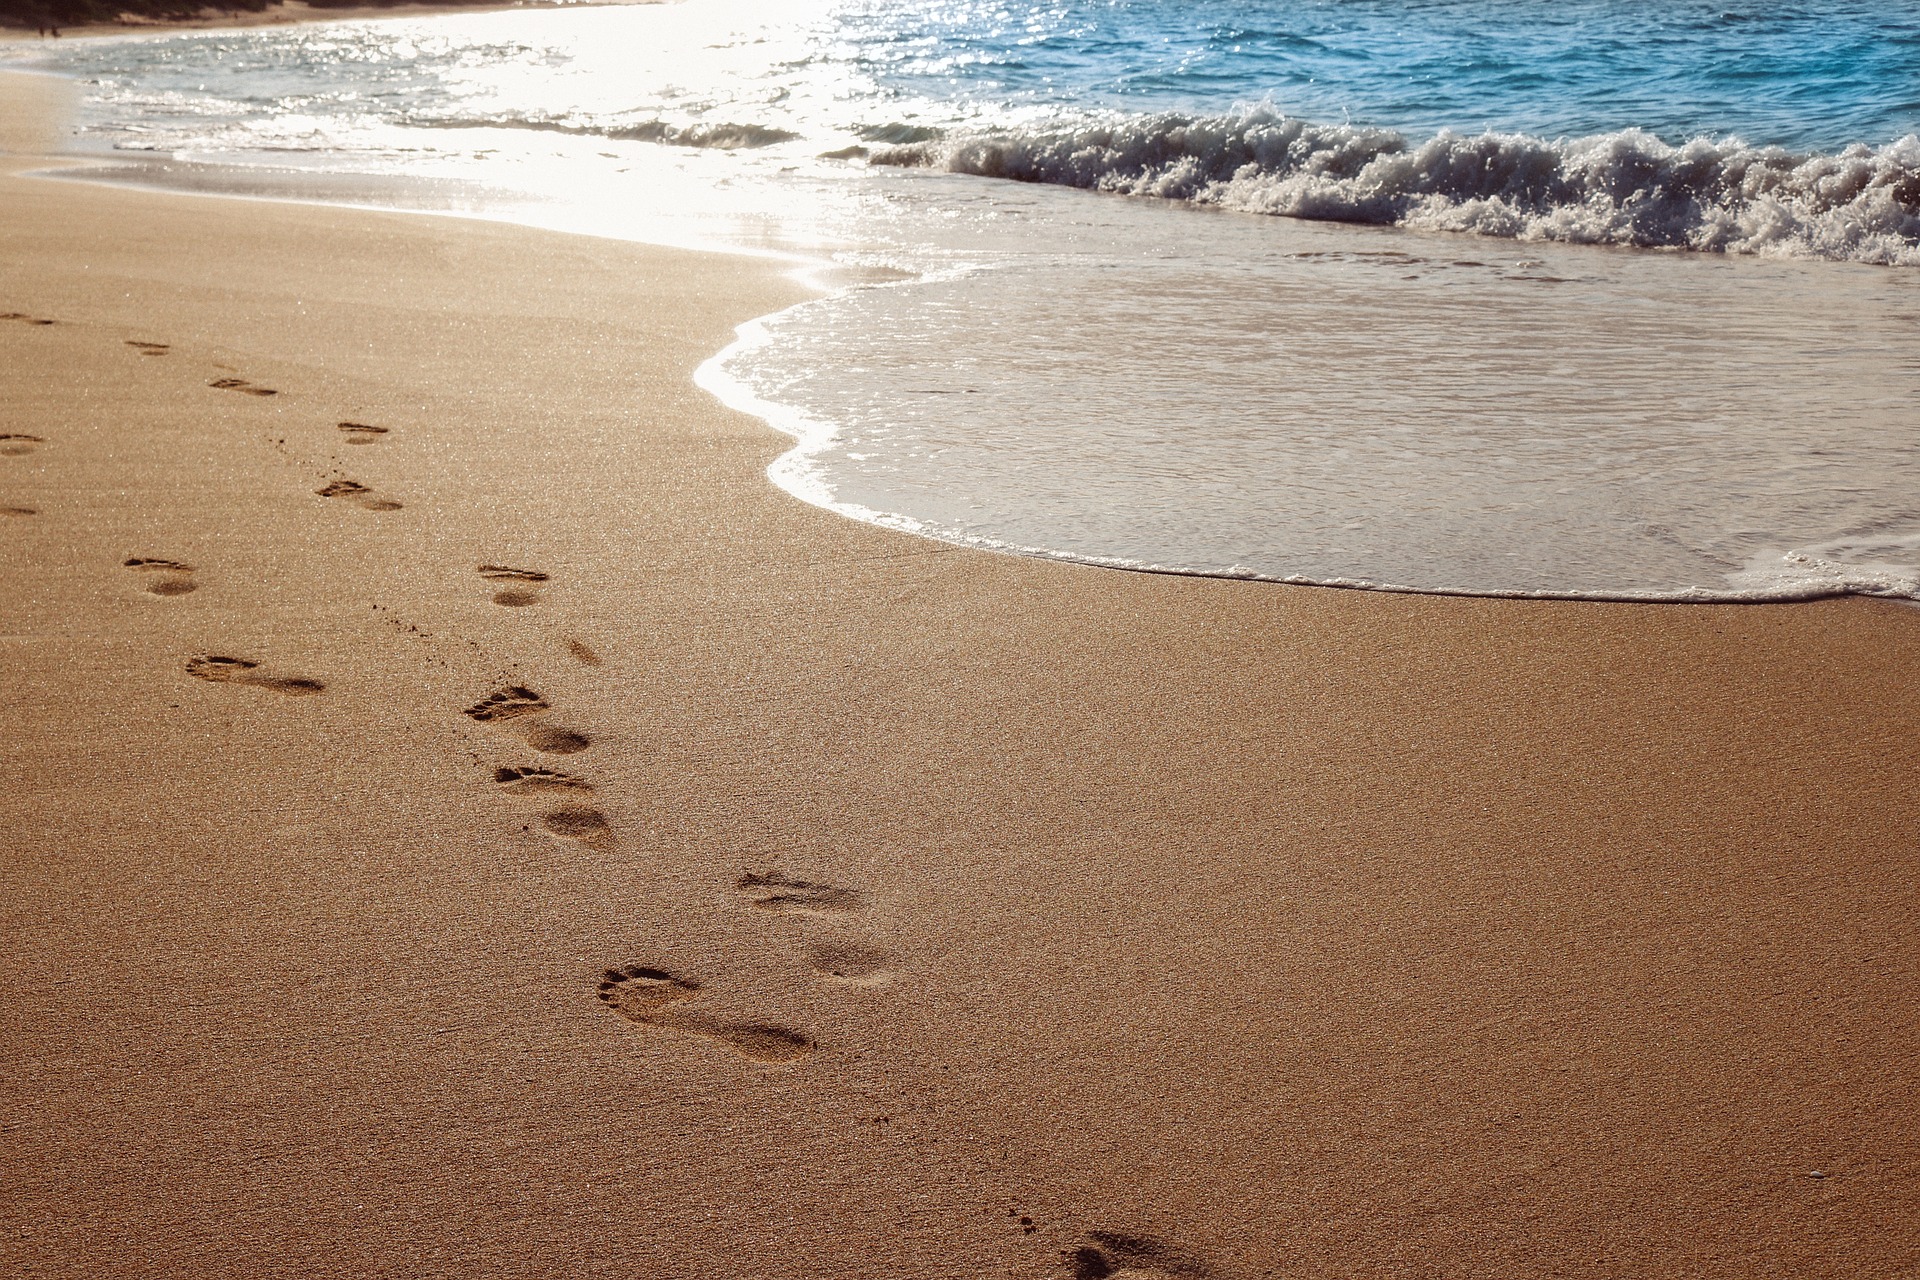 Footprints on wet sandy beach.